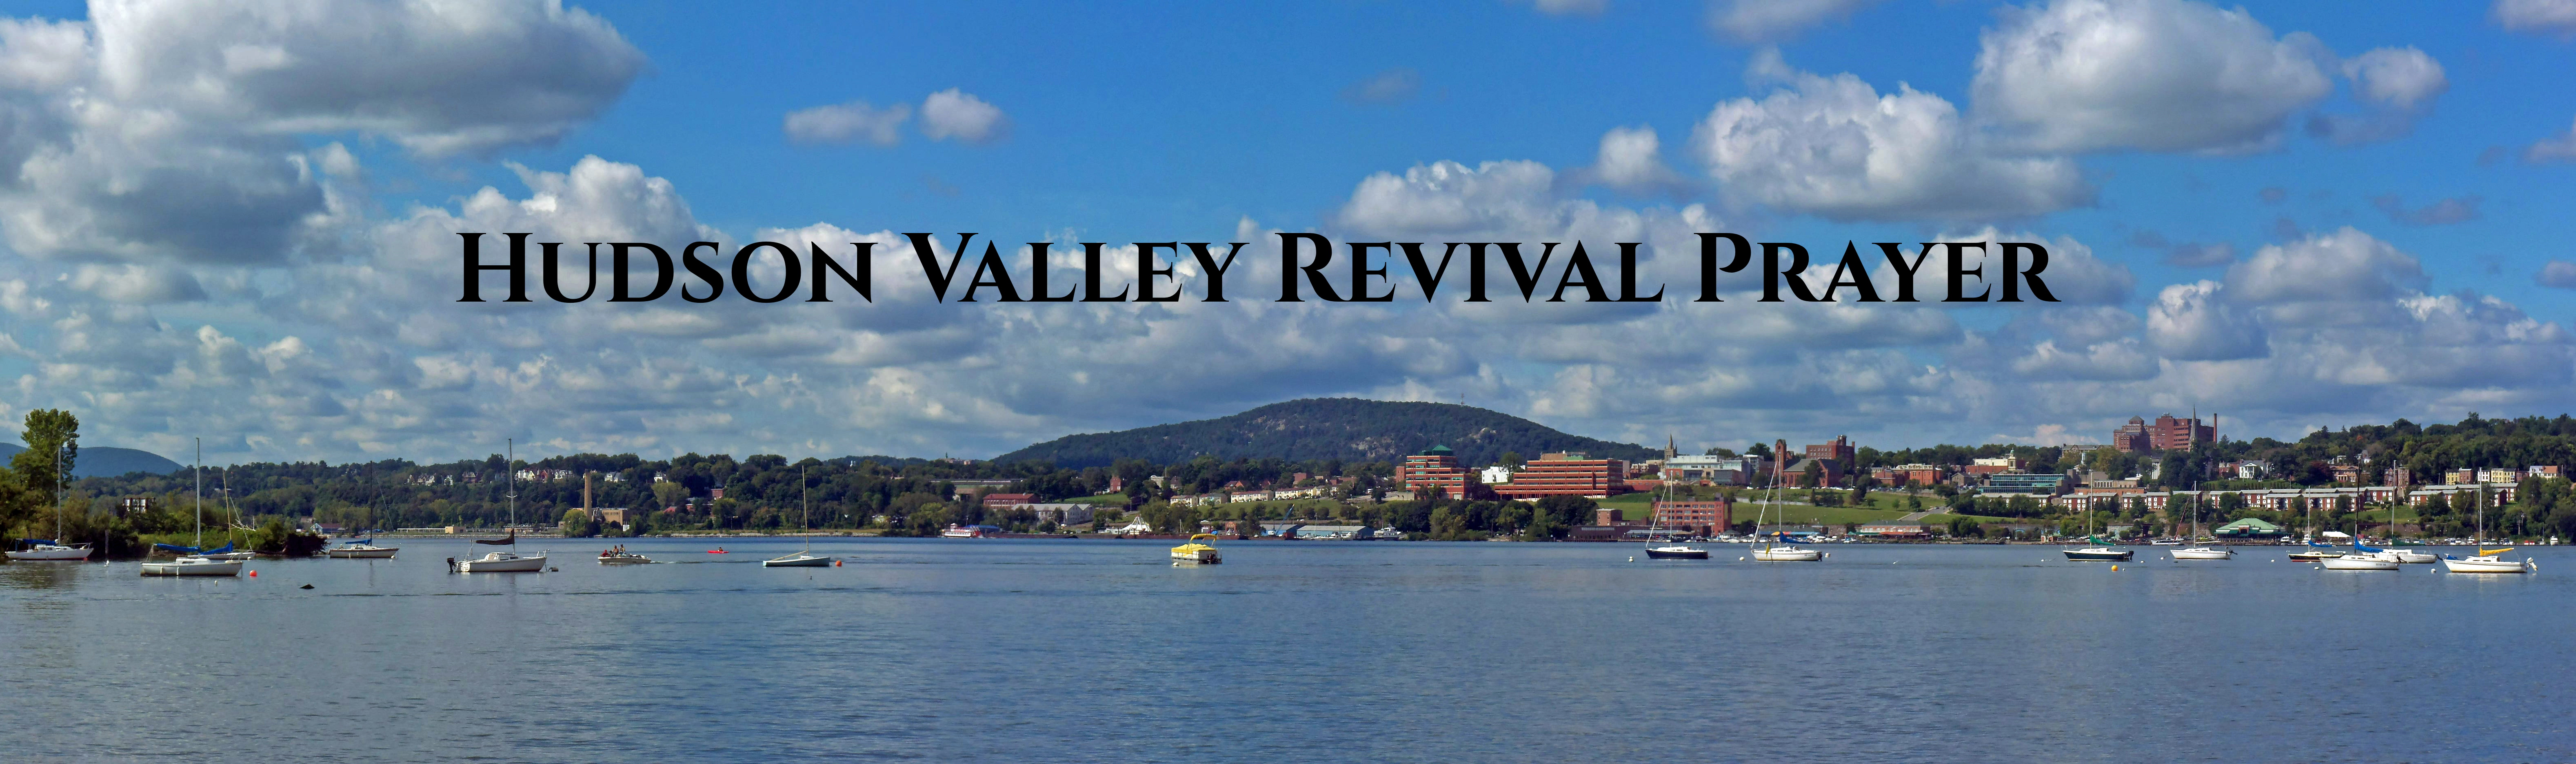 Hudson Valley Revival Prayer